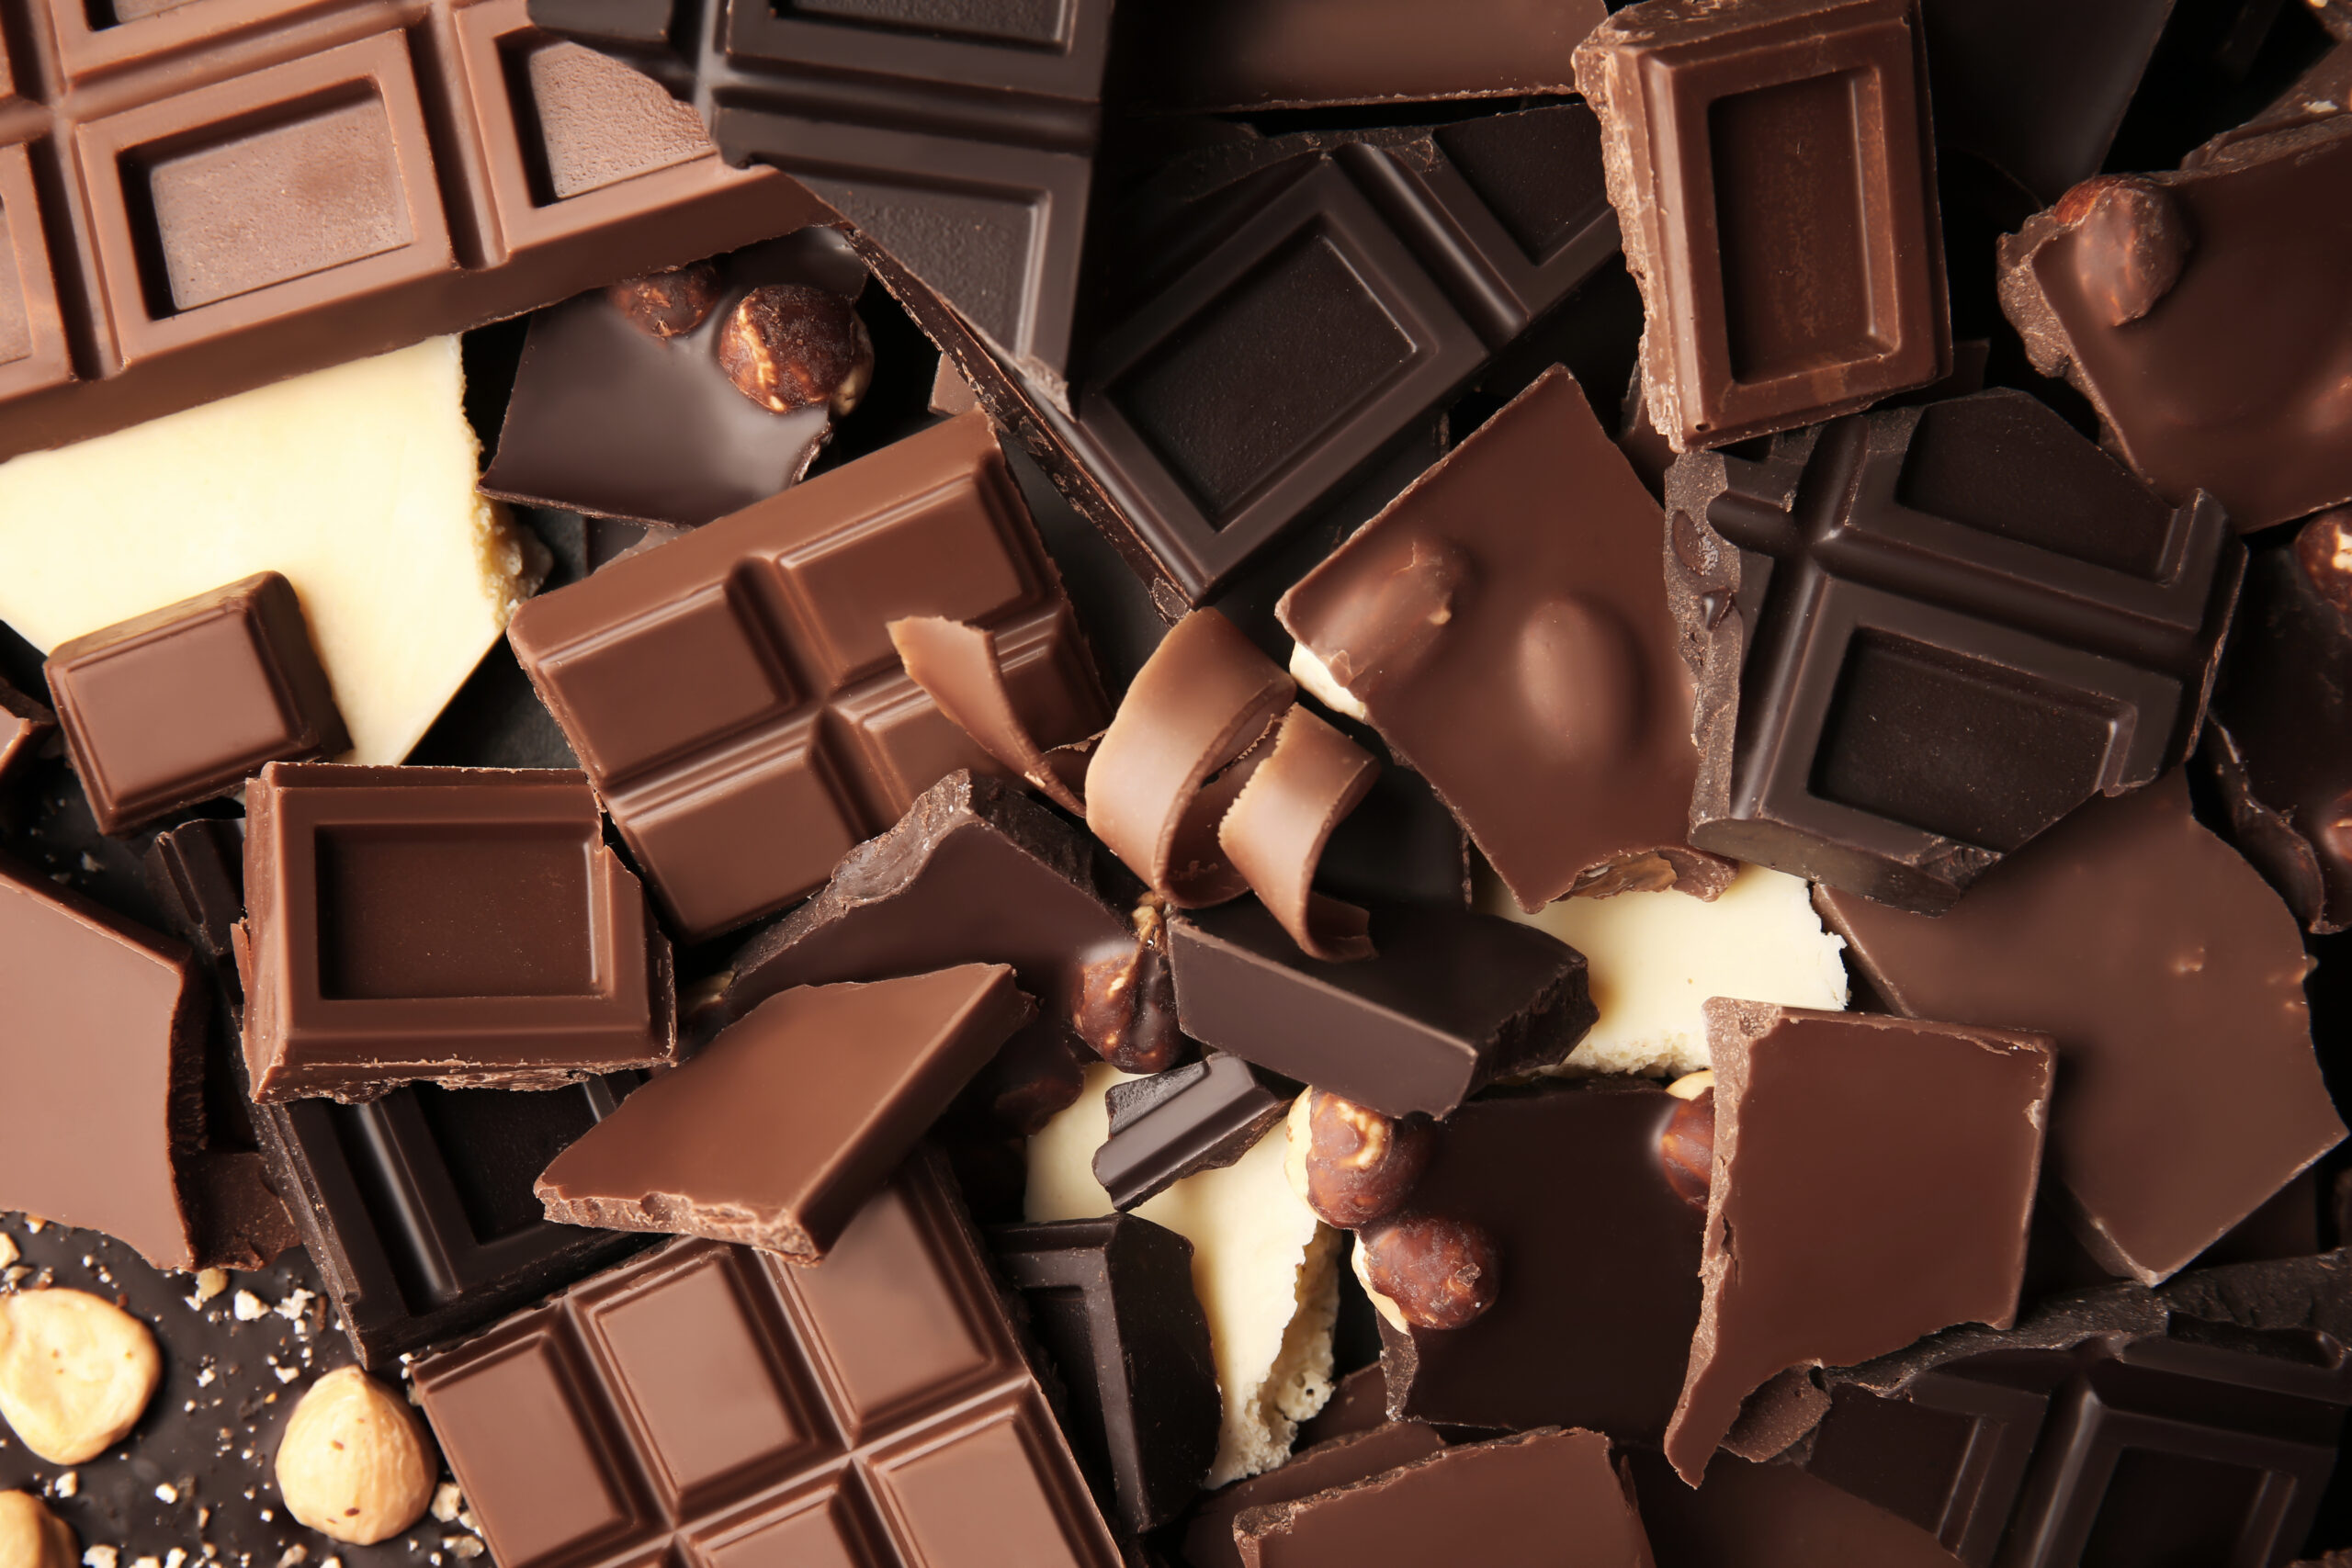 Schokolade: Stücke zerbrochener Schokolade